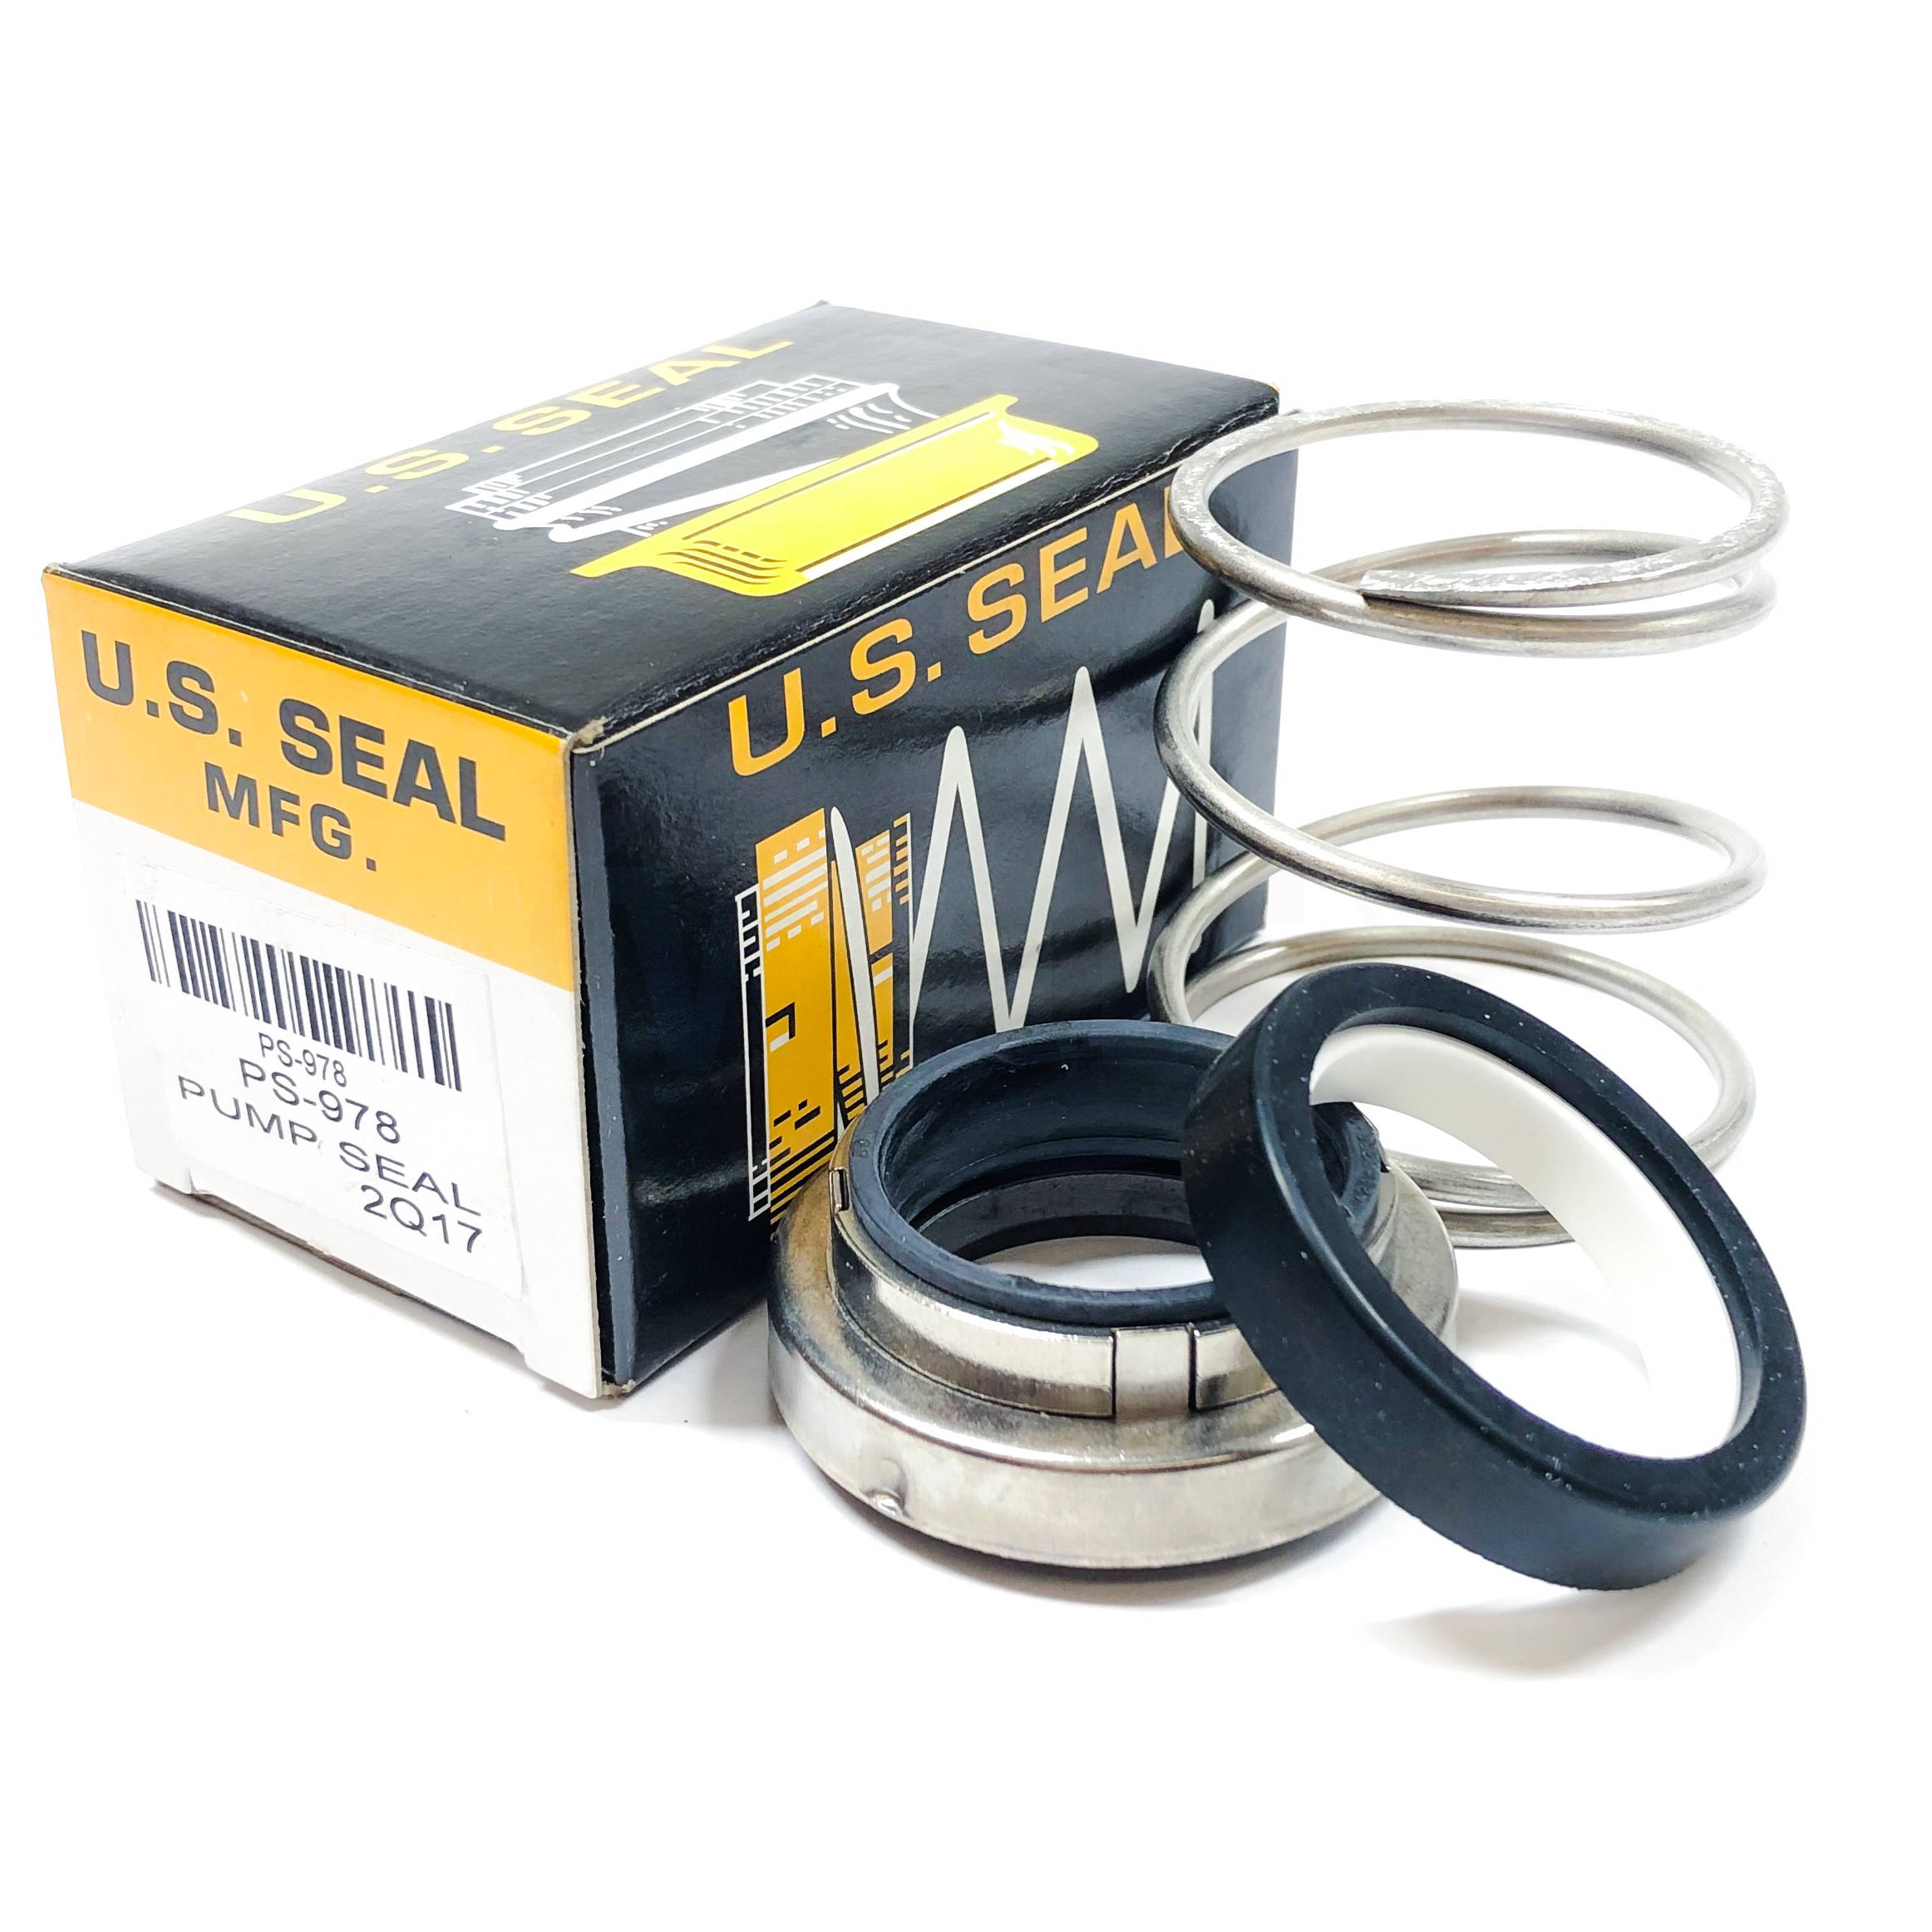 PS-978 U.S. Seal Mfg 1-1/4' Pump Seal 1